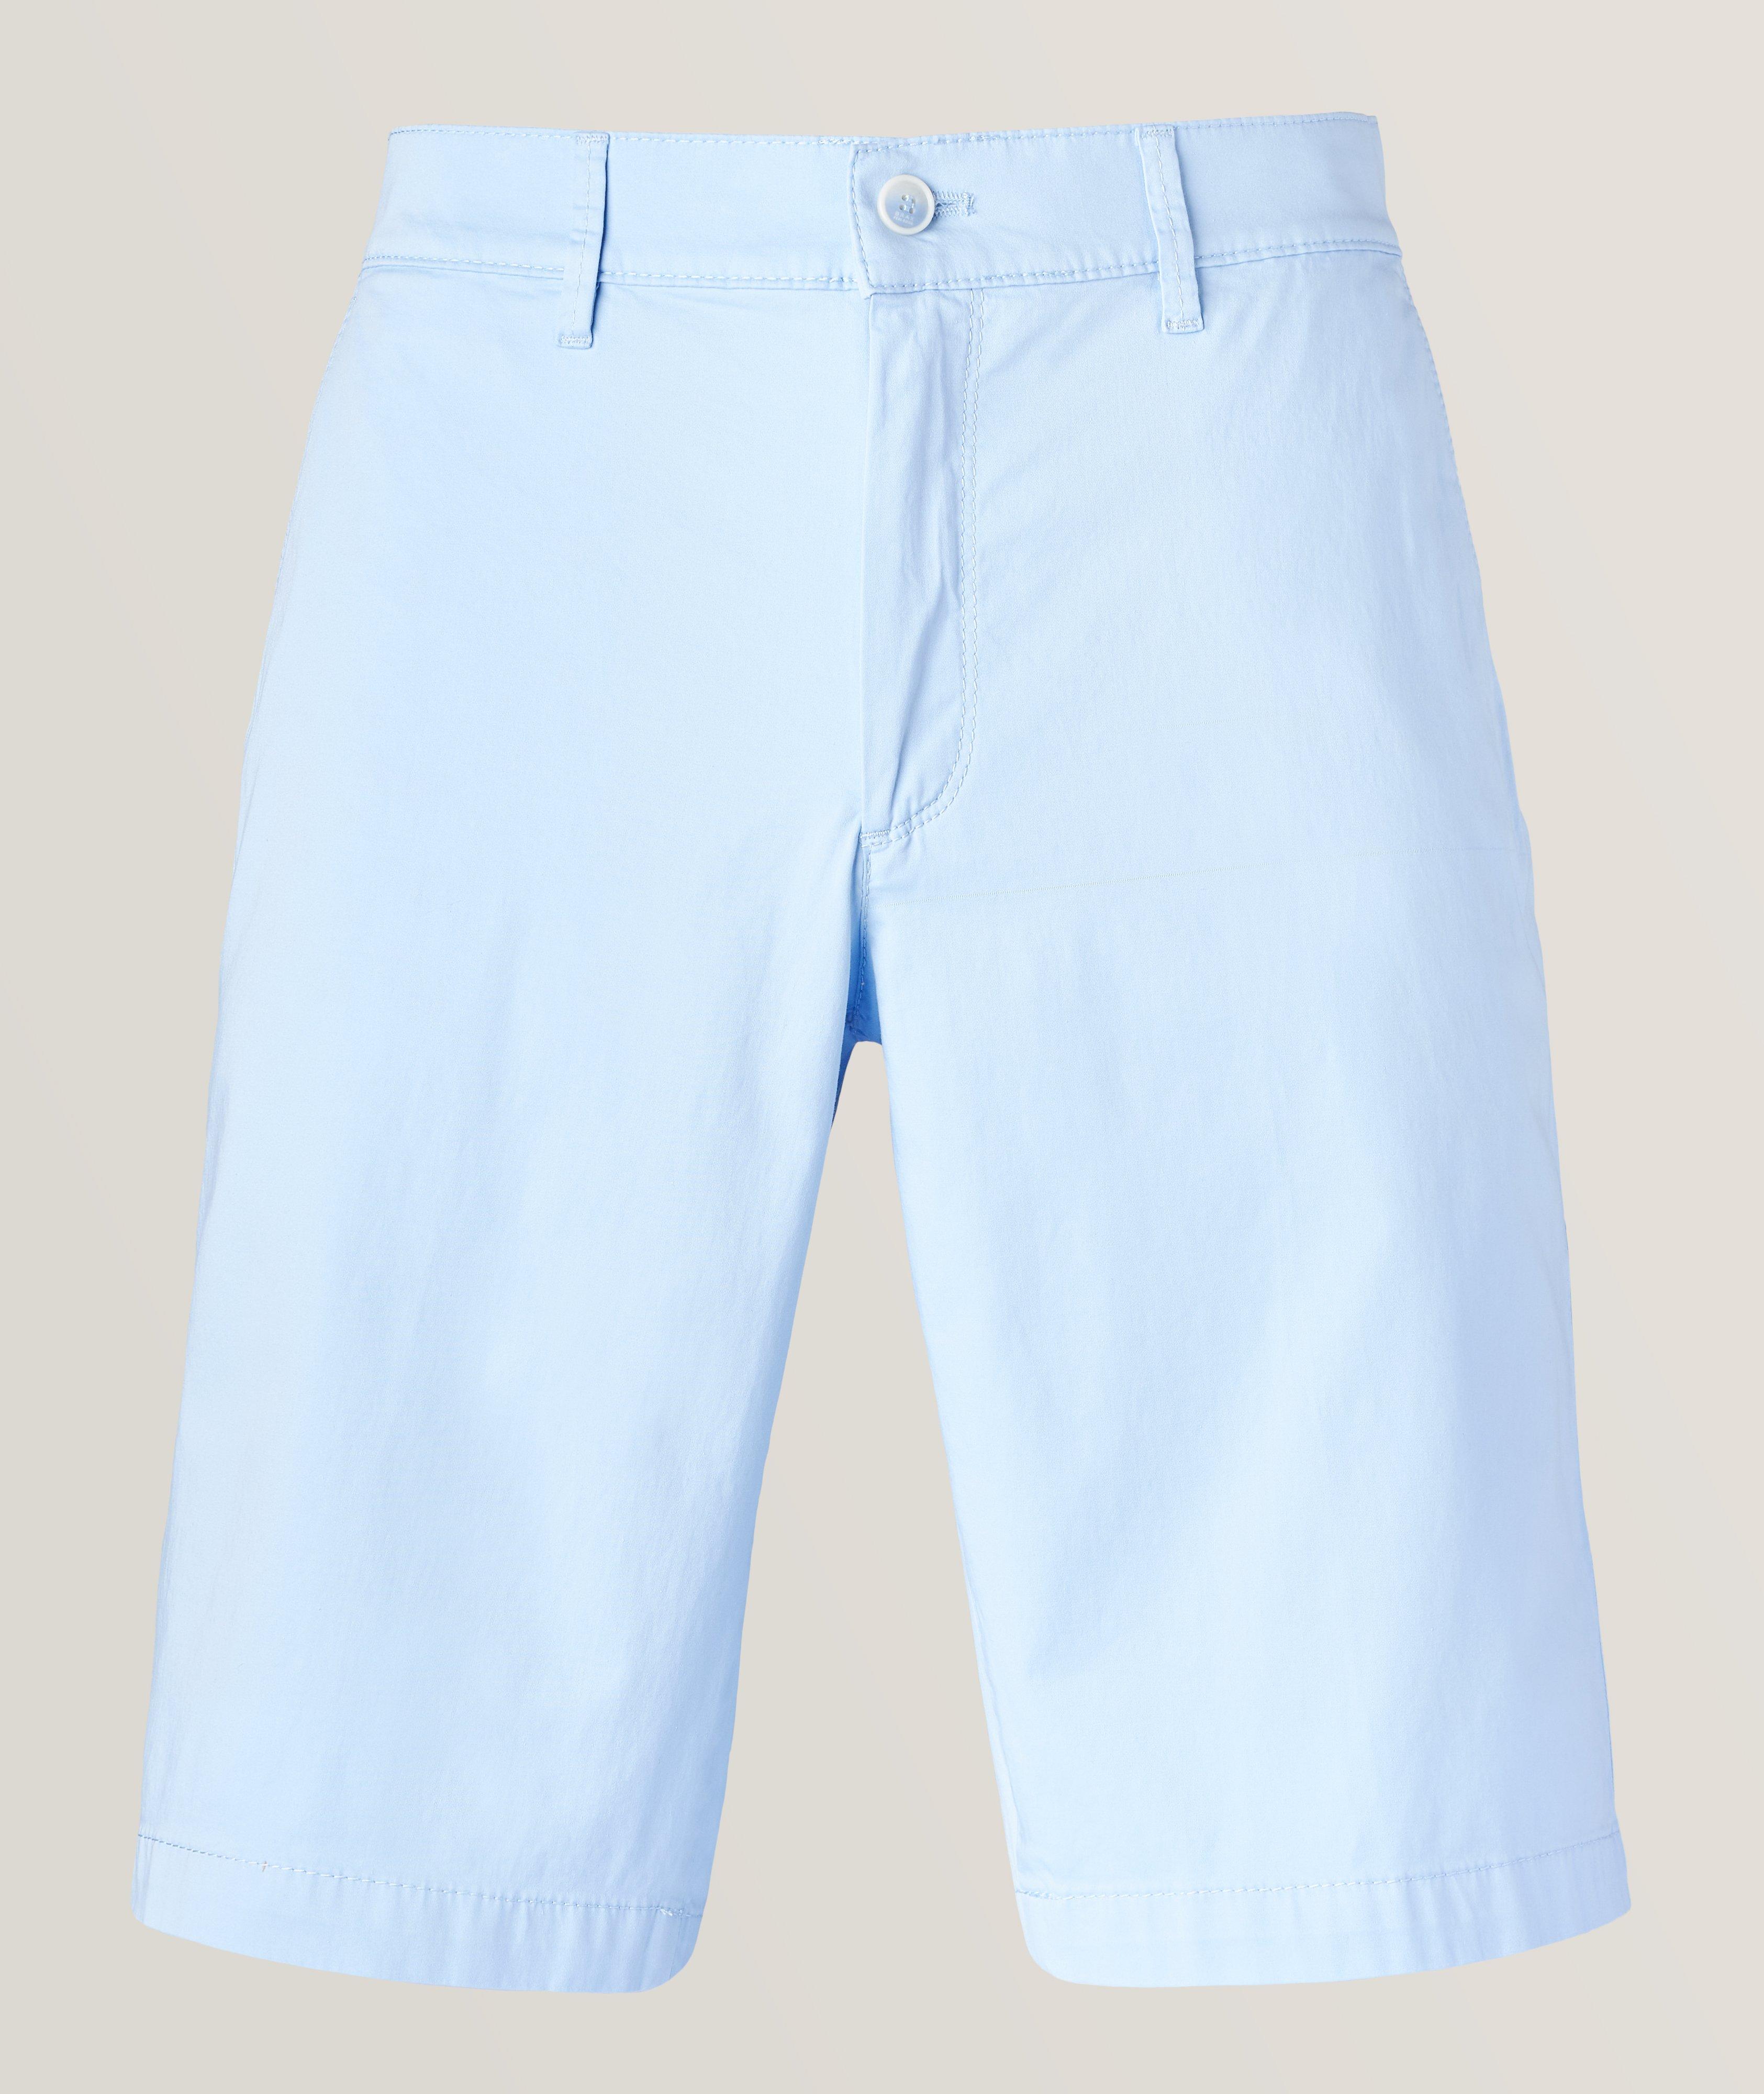 Bozen Ultralight Stretch-Cotton Shorts image 0